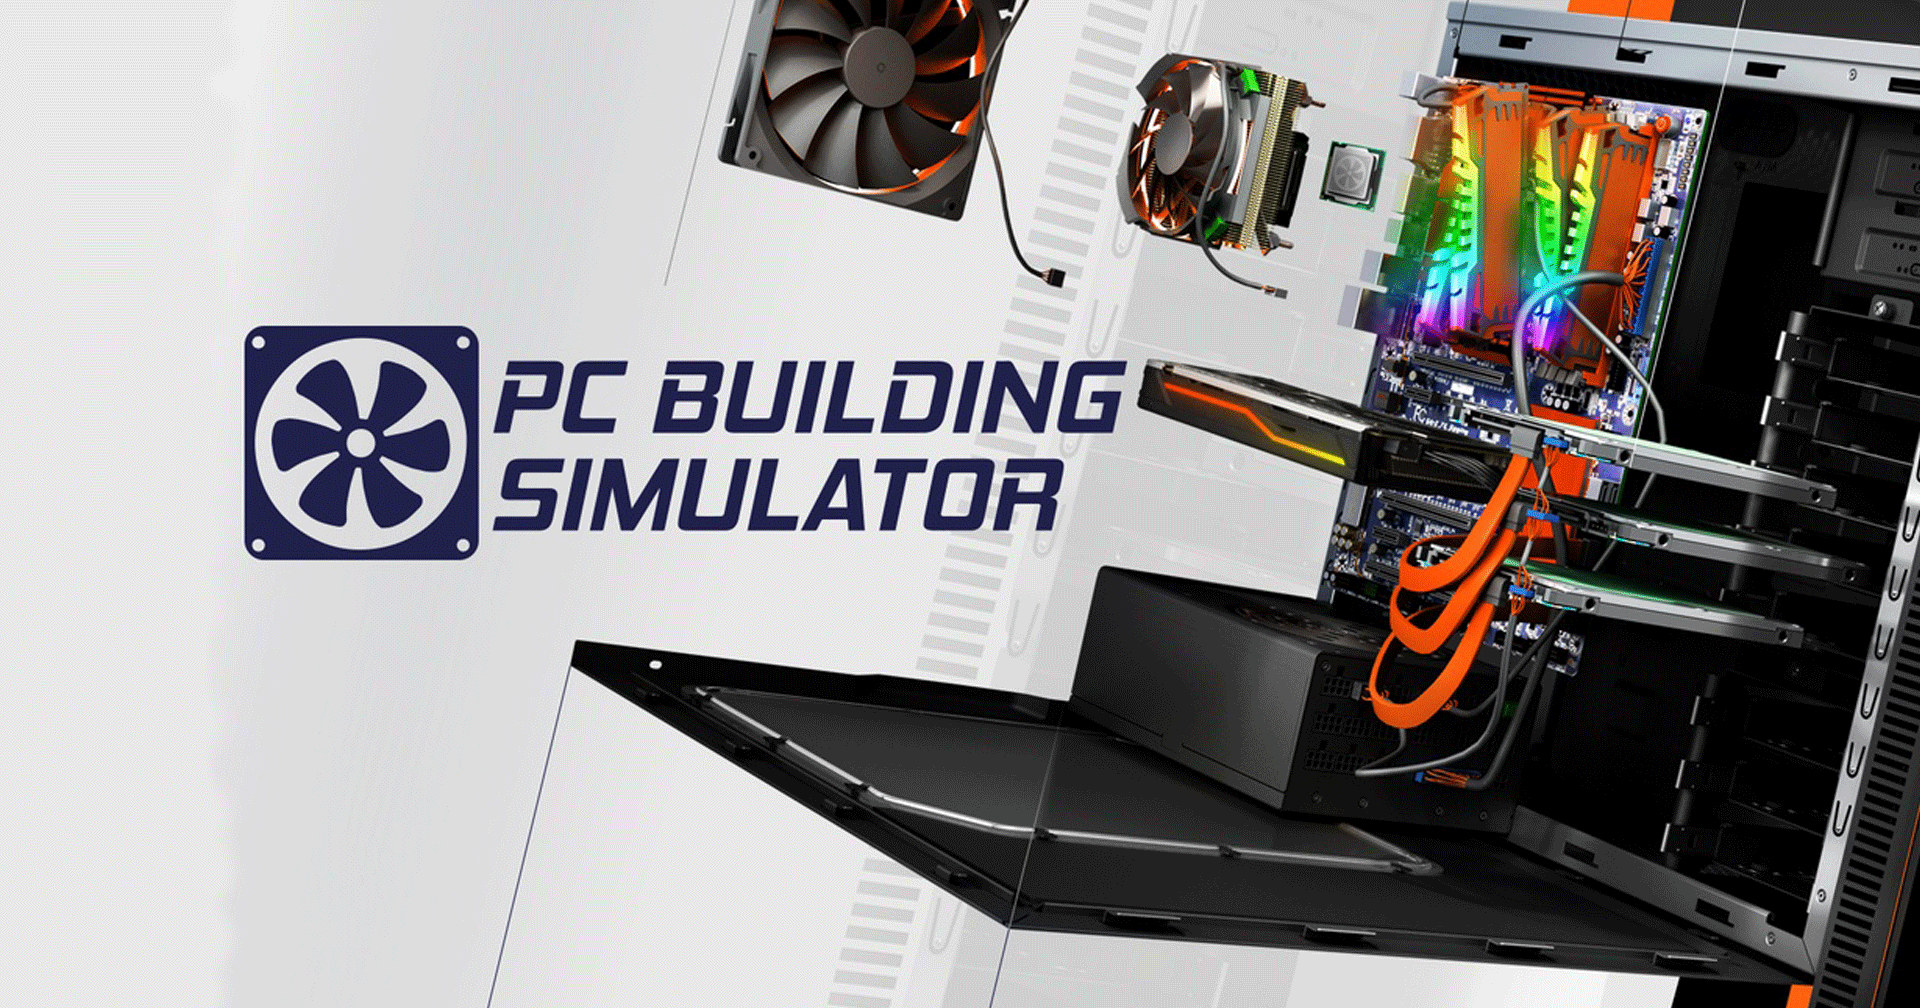 PC Building Simulator จะเป็นเกมแจกฟรีบน Epic Store สำหรับเดือนตุลาคมนี้